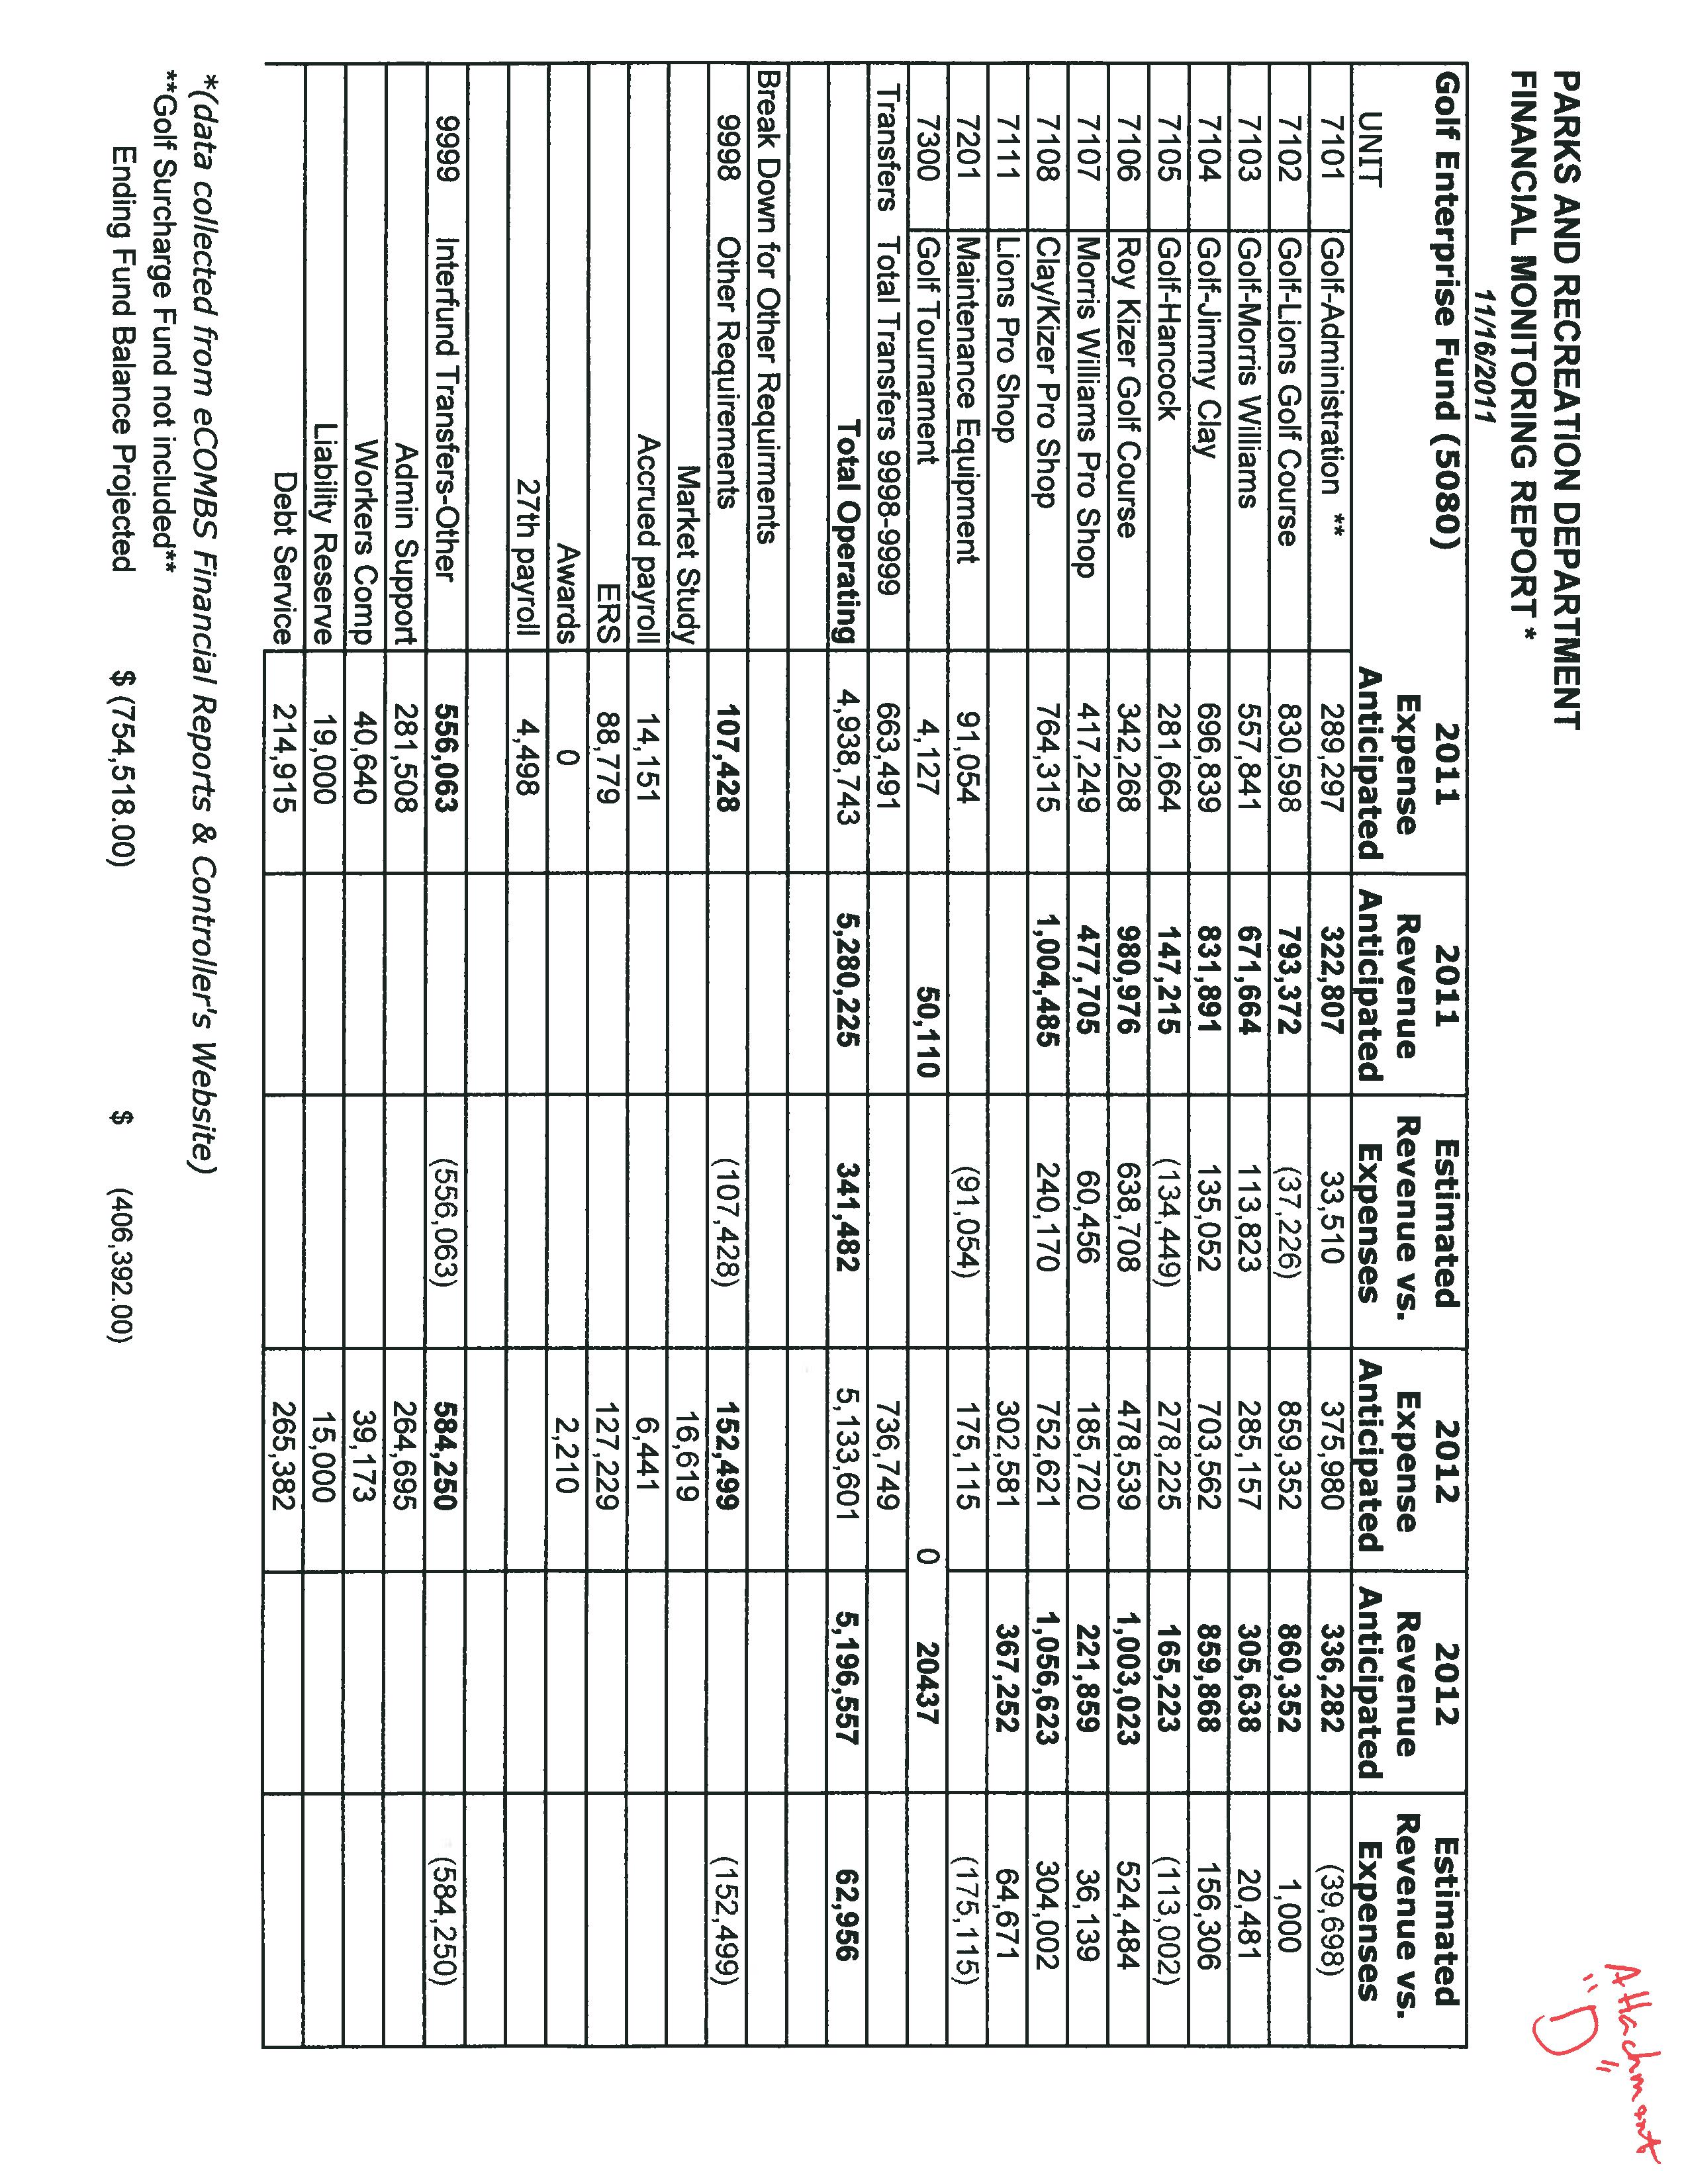 Golf Division Financial Report 2011-12 (attachment D)